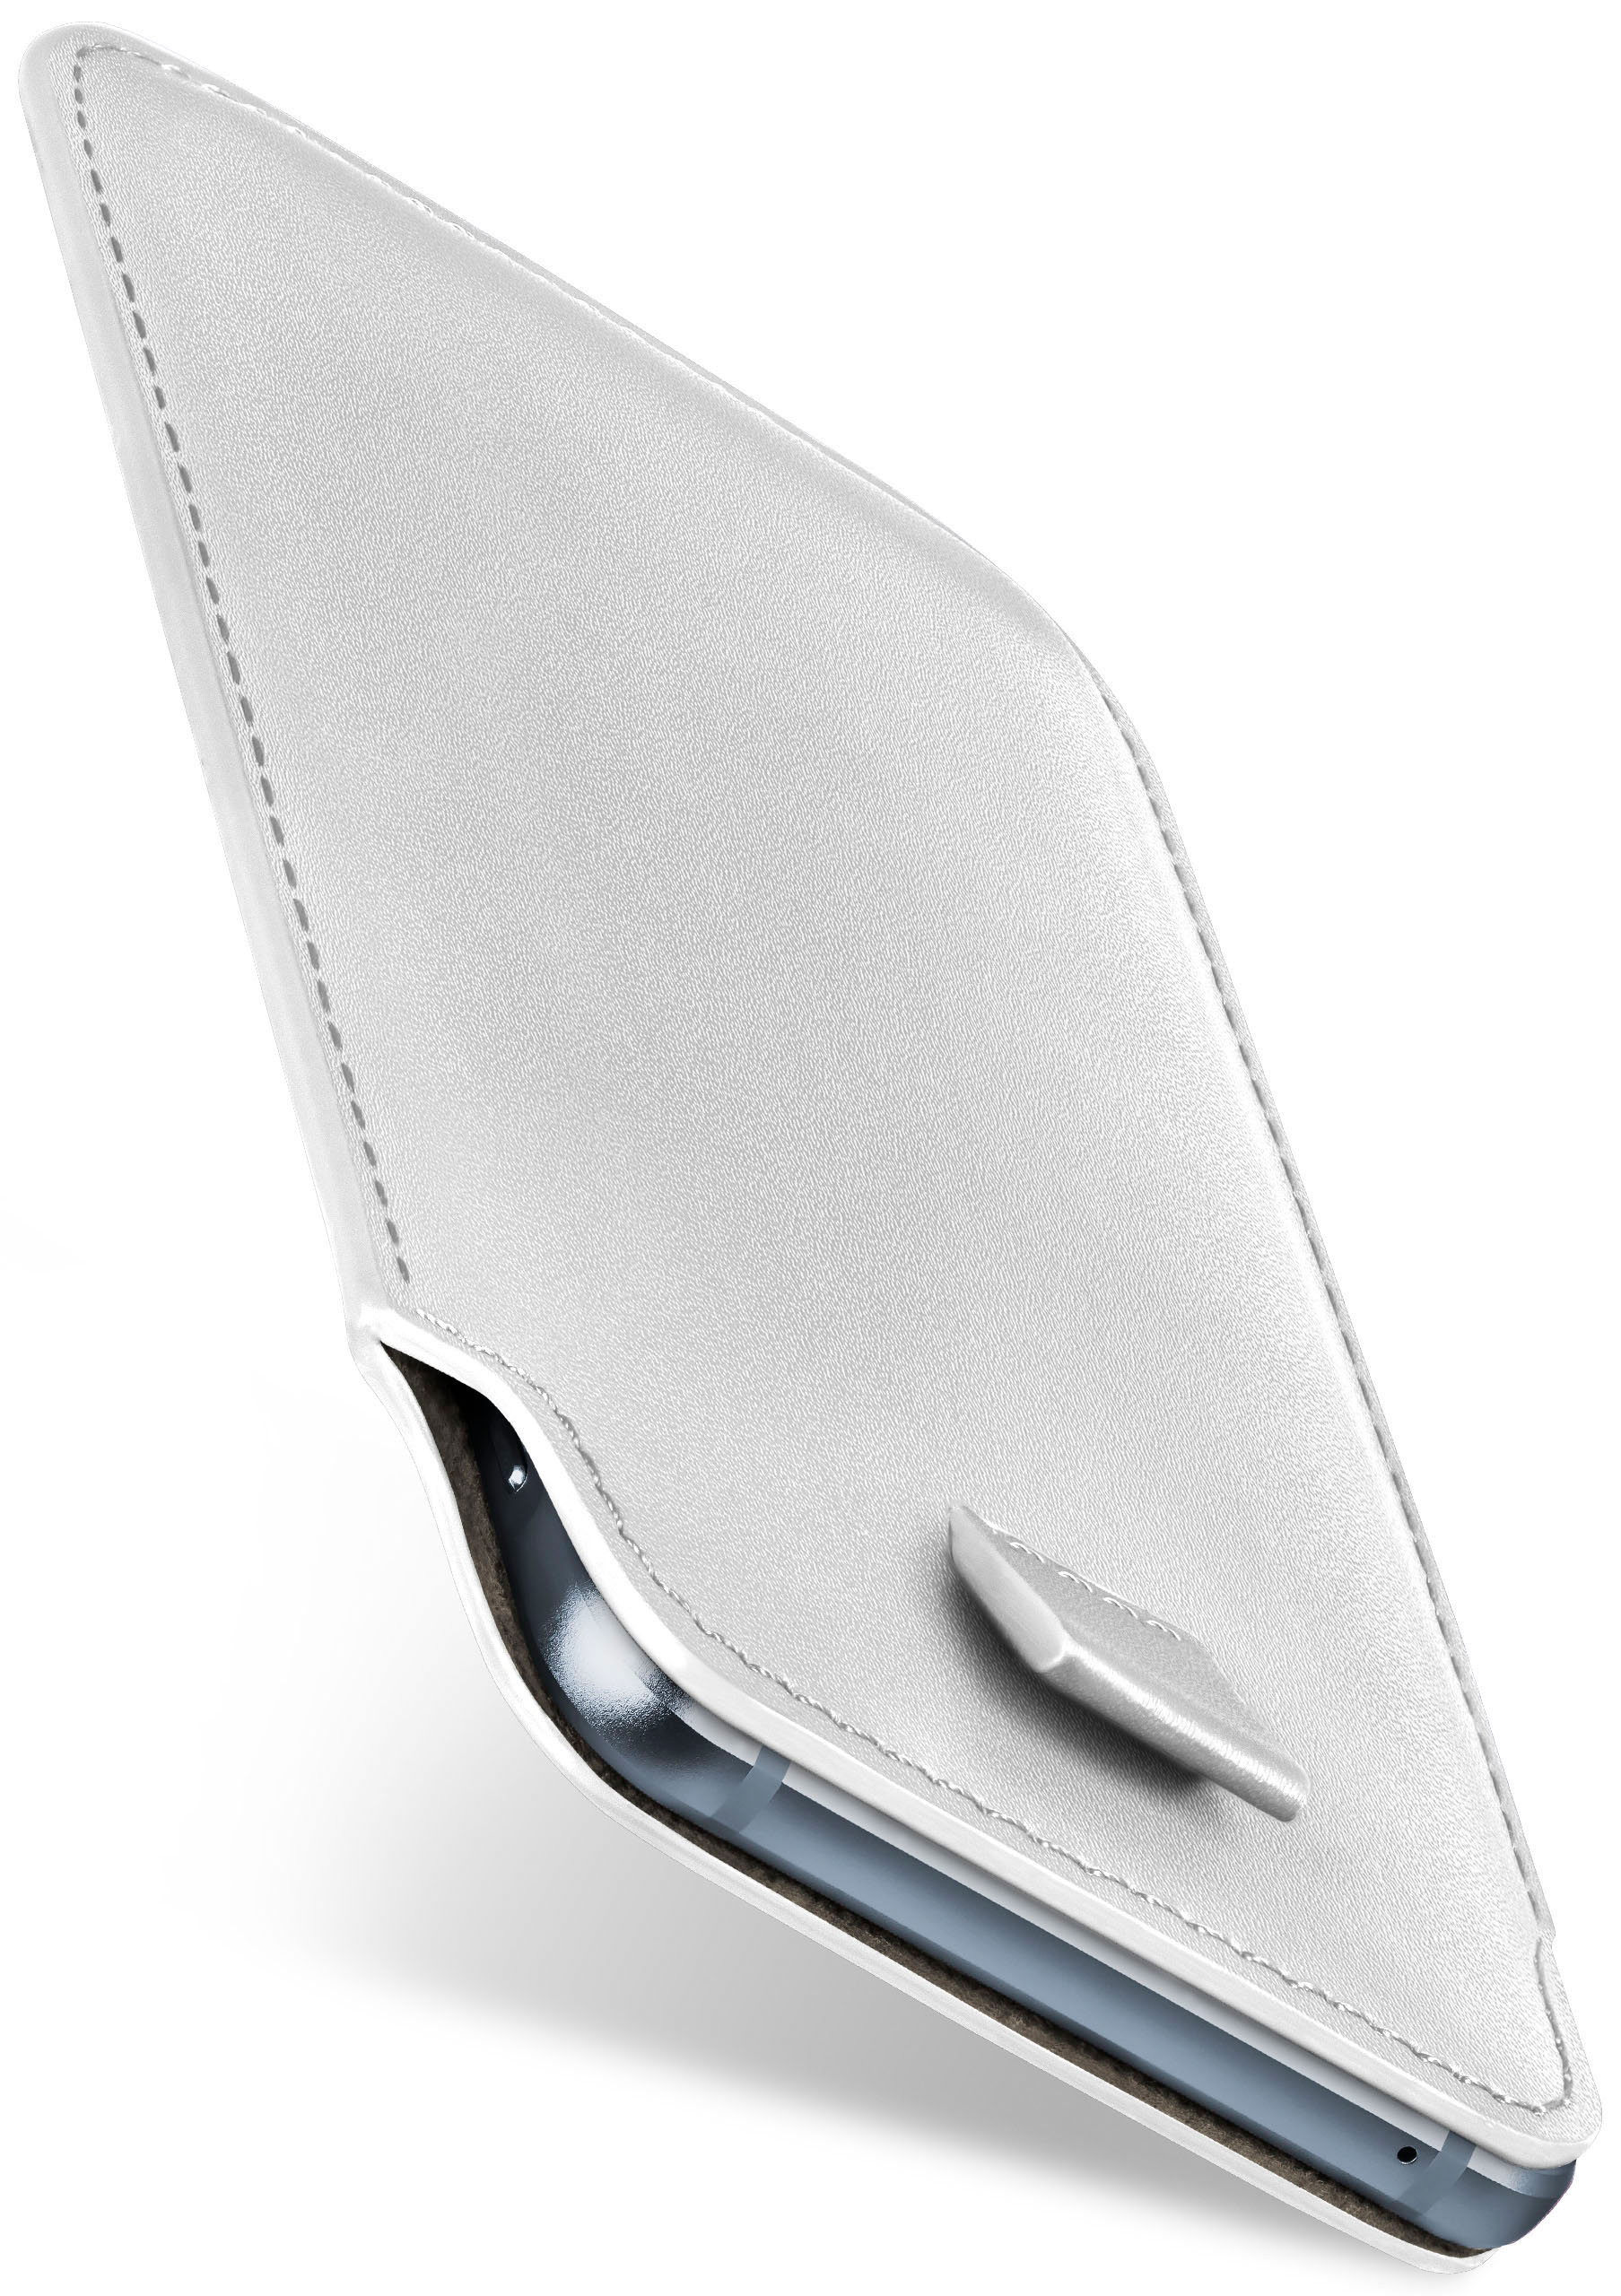 Shiny-White / 630 Case, Cover, MOEX Full 635, Slide Lumia Nokia,